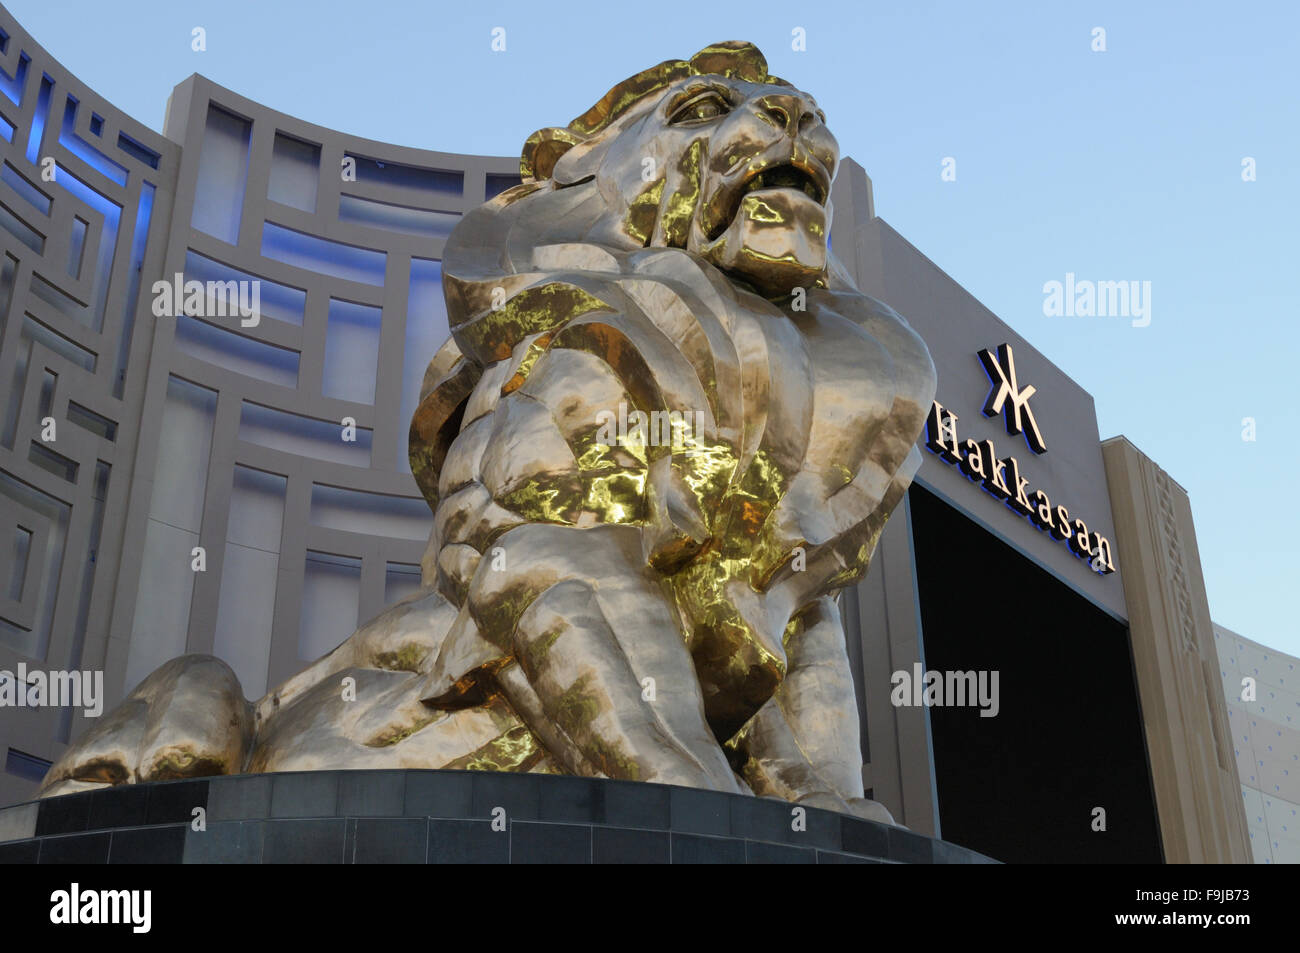 MGM Grand Lion, MGM Grand Hotel, Hakkasan discoteca. Foto de stock